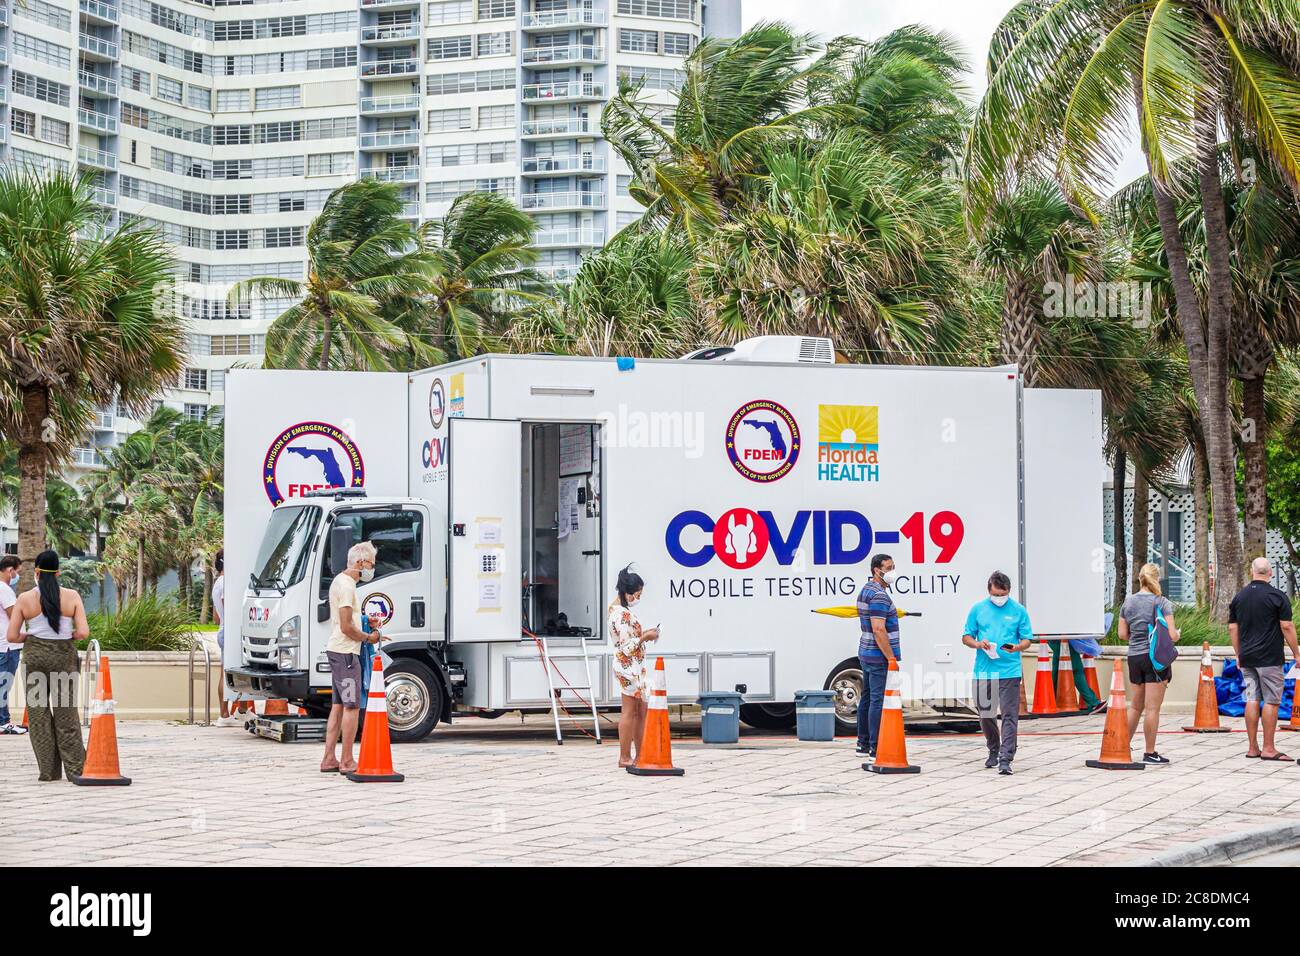 Miami Beach Florida,Covid-19 coronavirus pandemic Biological Crisis,mobile testing facility,FDEM Division of Emergency Management,line Queue,man men m Foto Stock